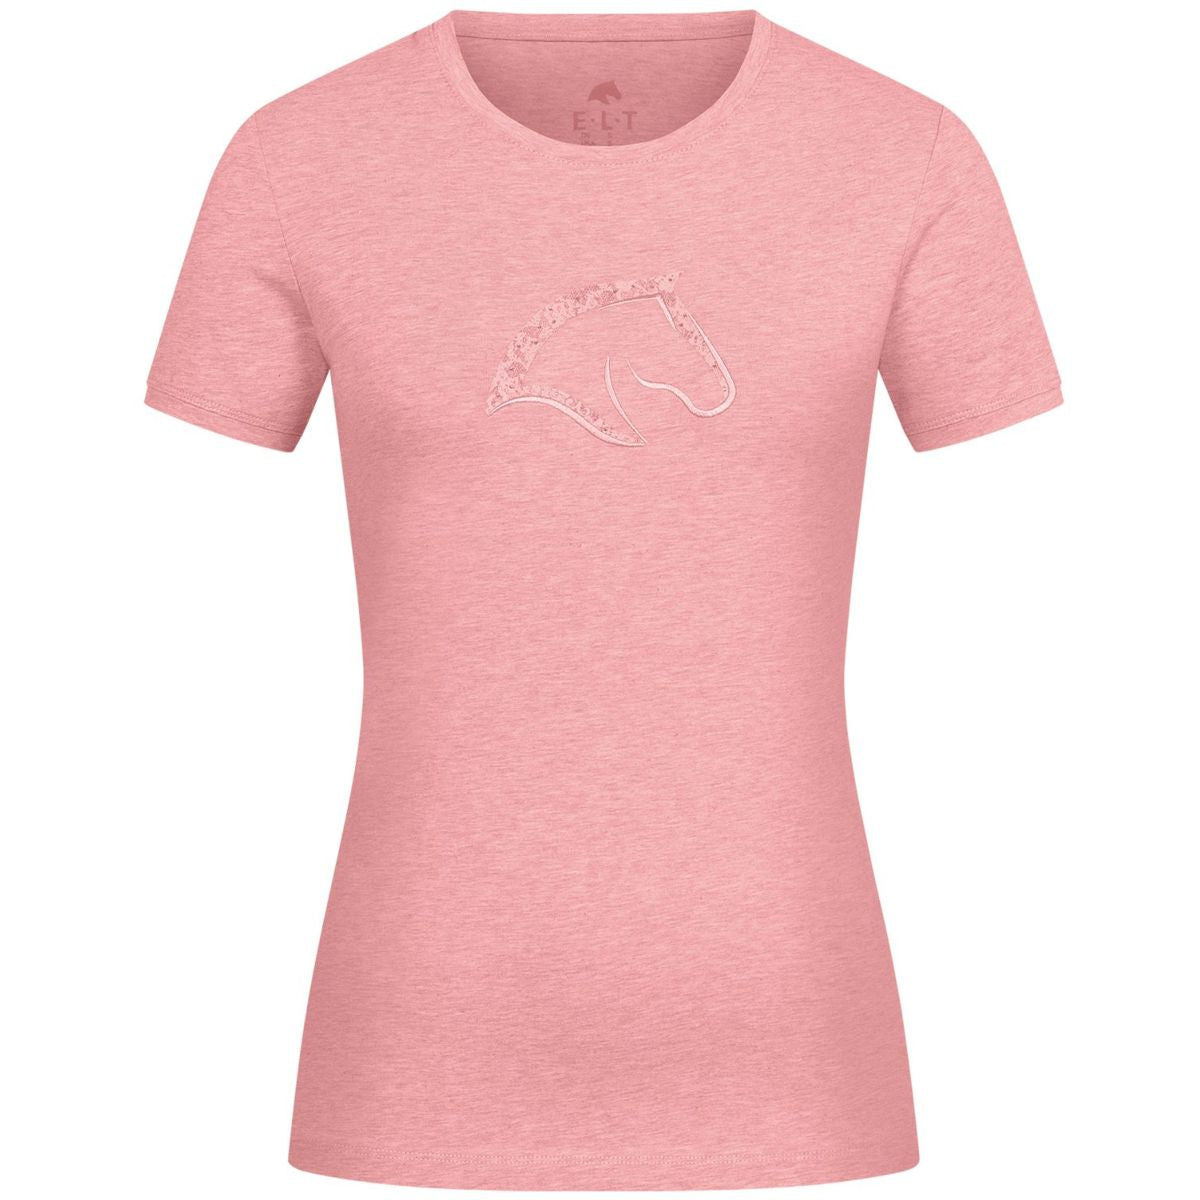 Waldhausen T-Shirt New Orleans Kurze Ärmel Flamingo Melange